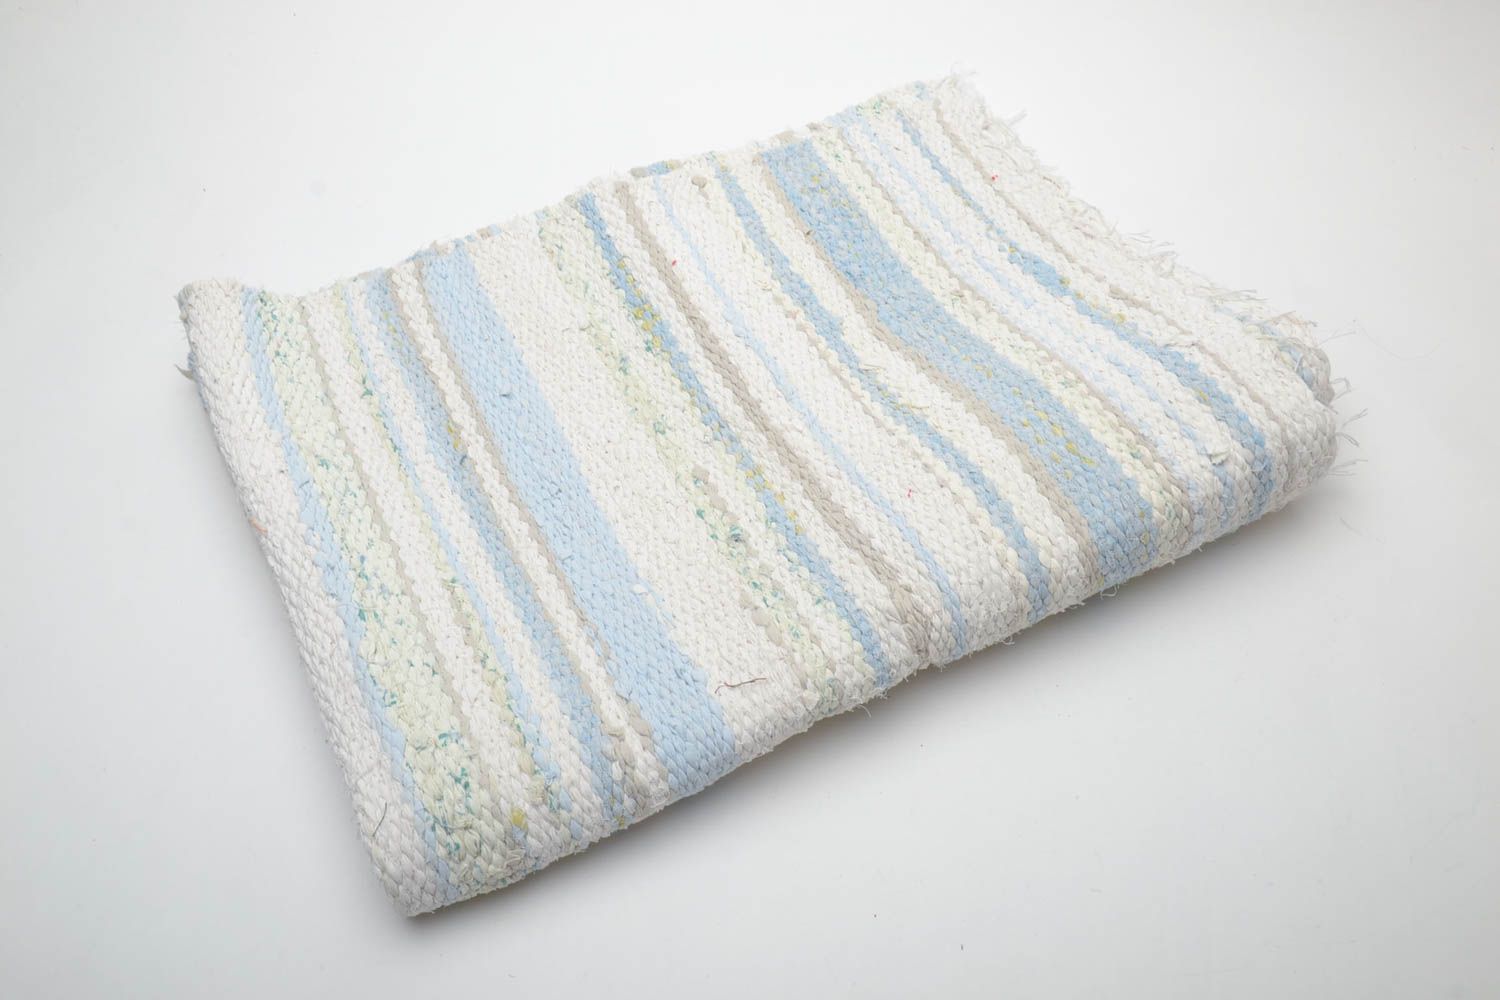 Hand woven rug made of natural materials photo 4